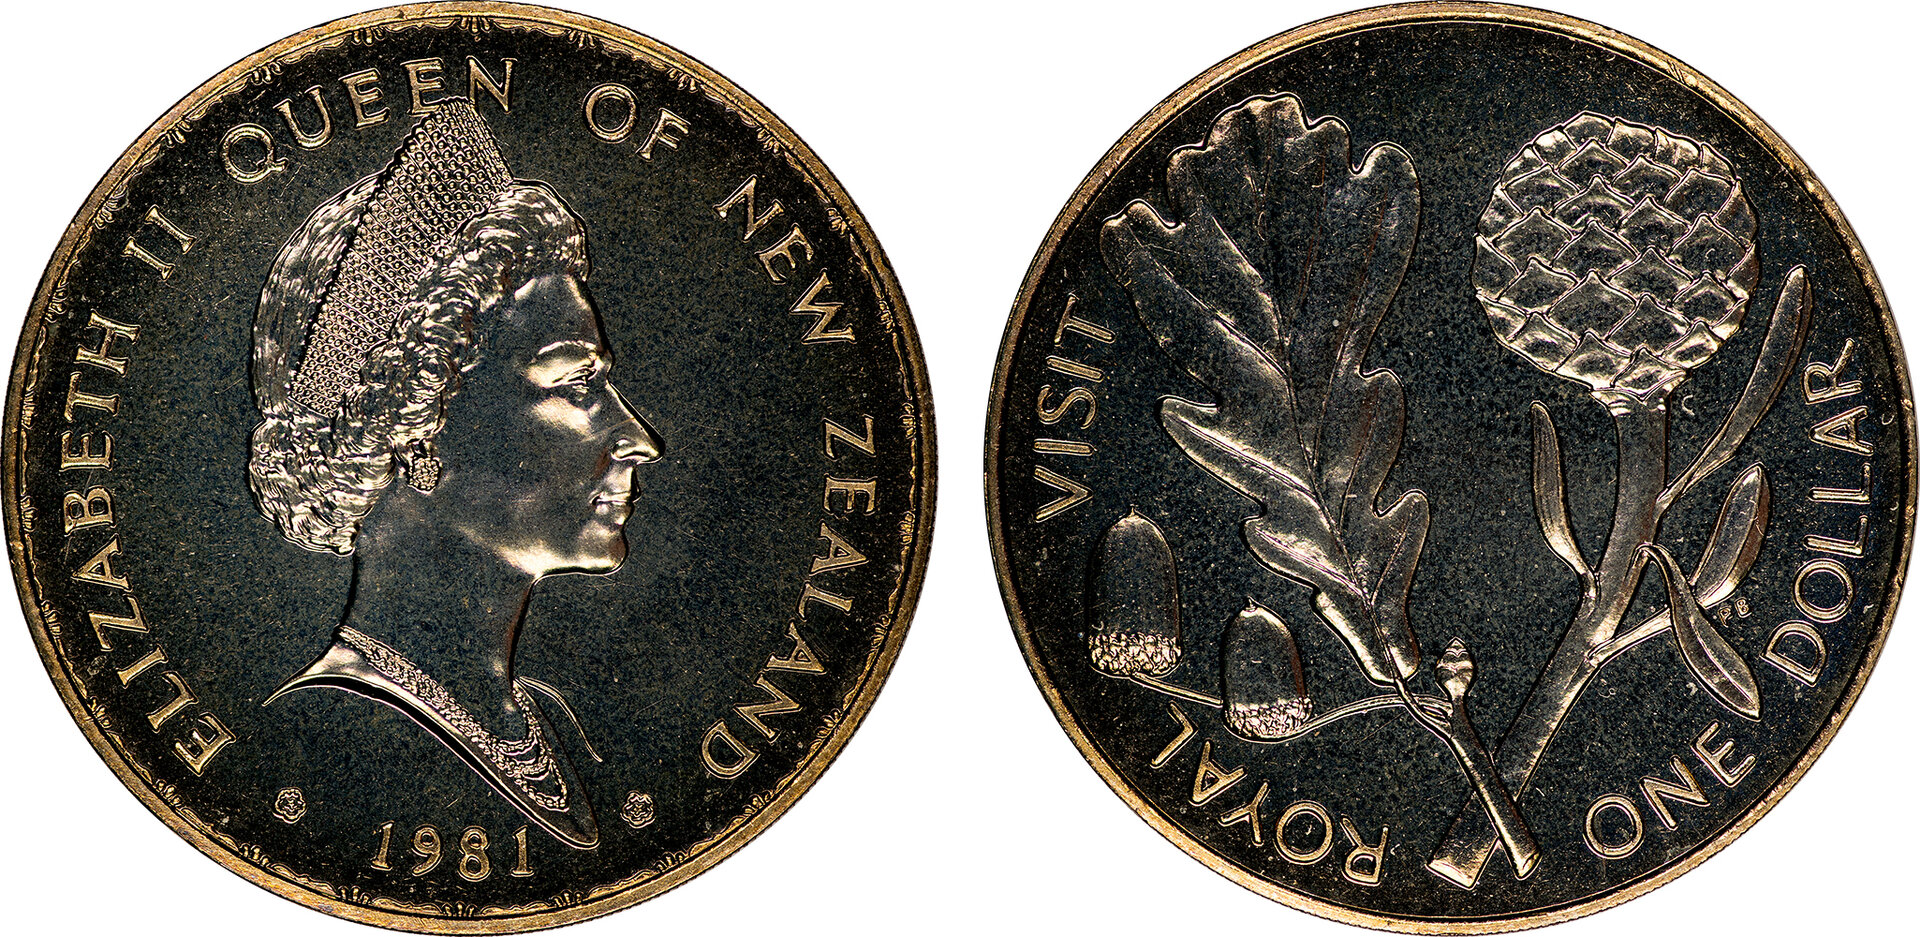 New Zealand - 1981 1 Dollar (Royal Visit).jpg